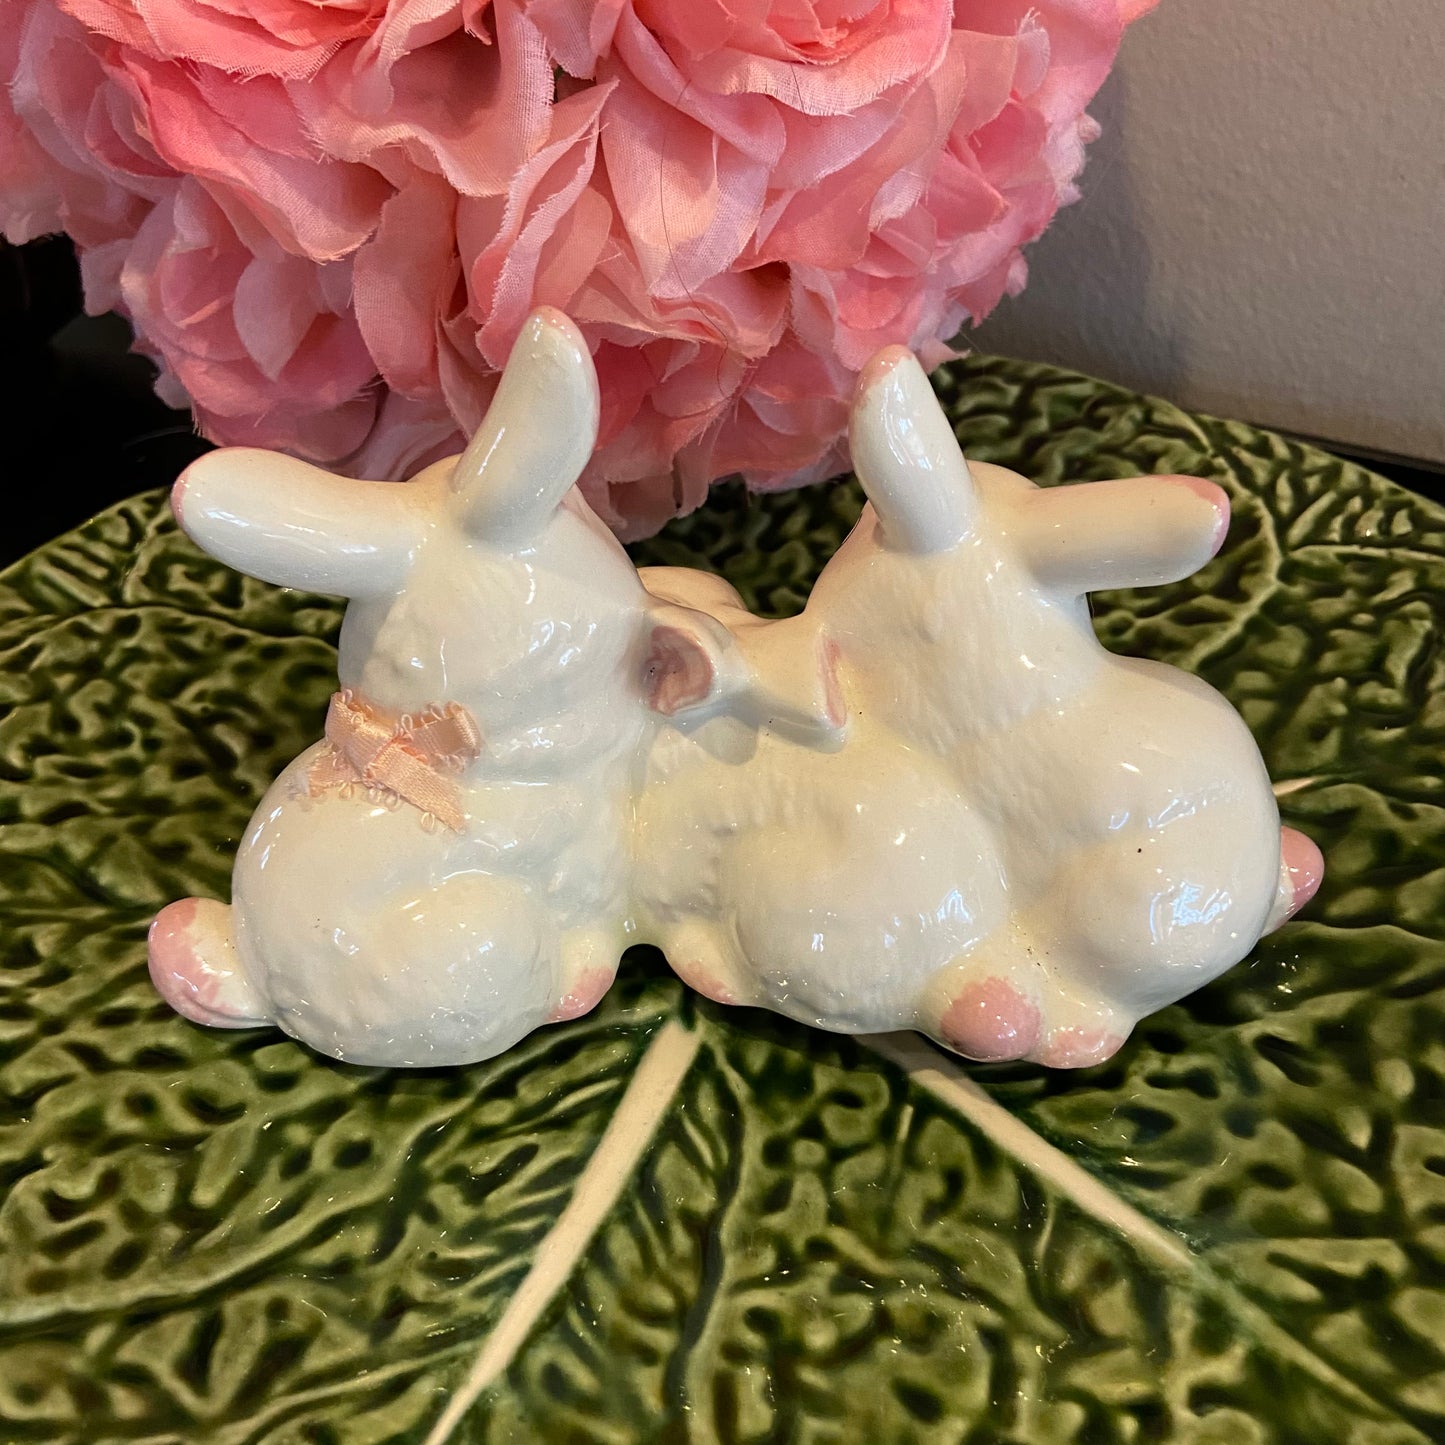 Three lil bunnies pink & white figures